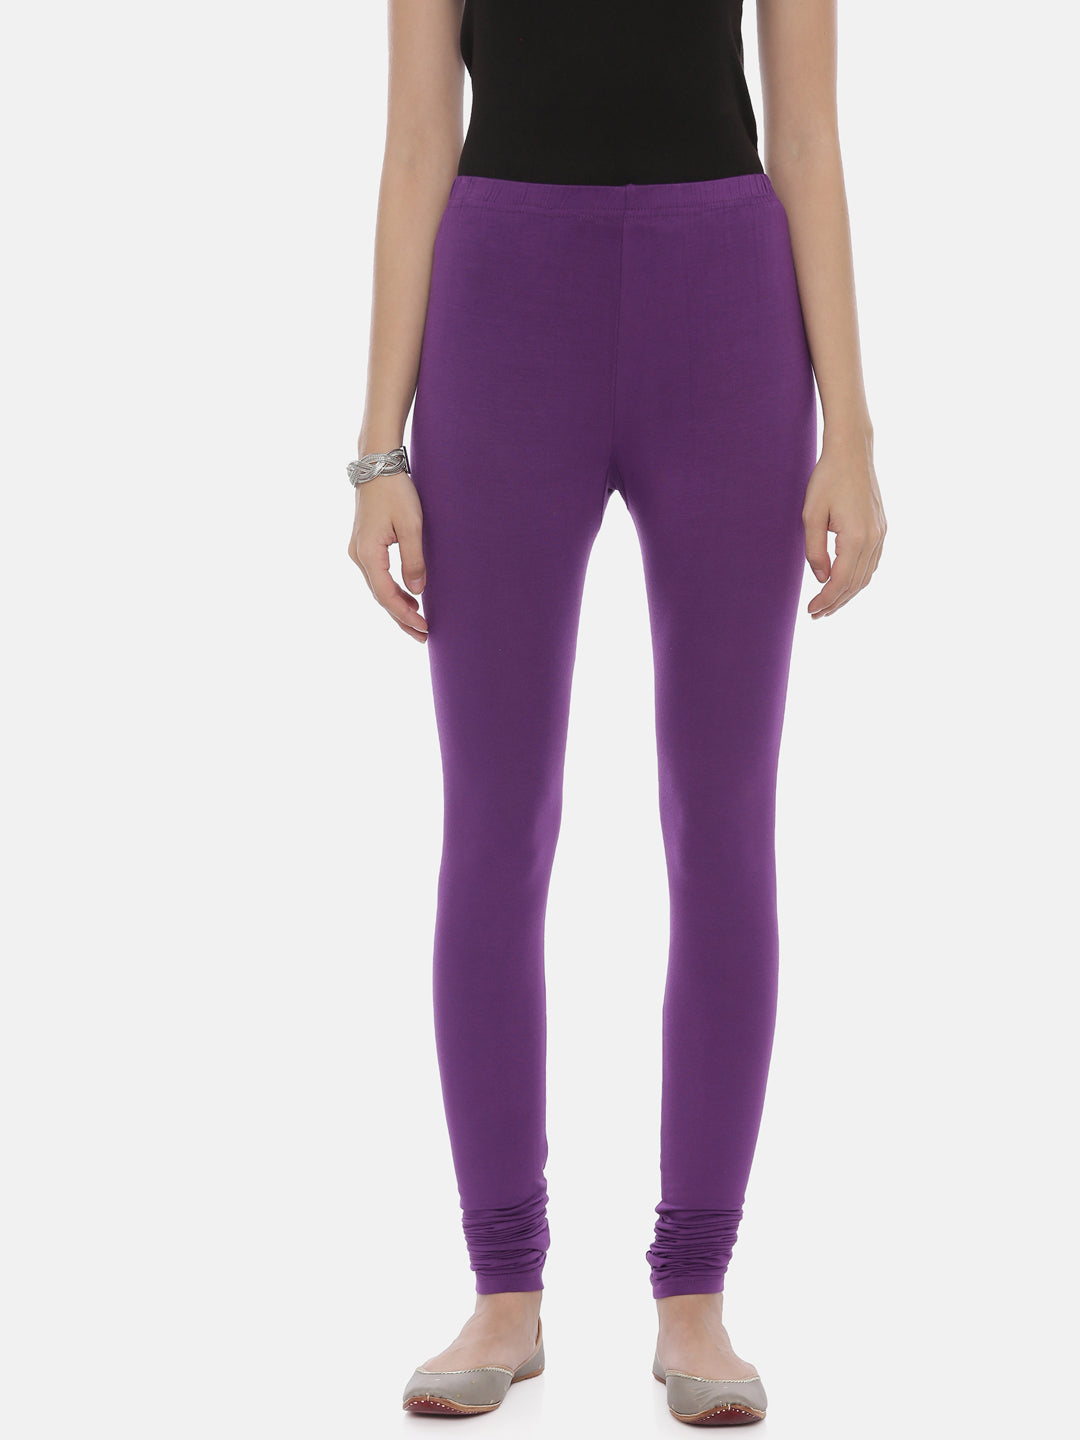 Neerus Purple  Color Lycra Fabric Leggings